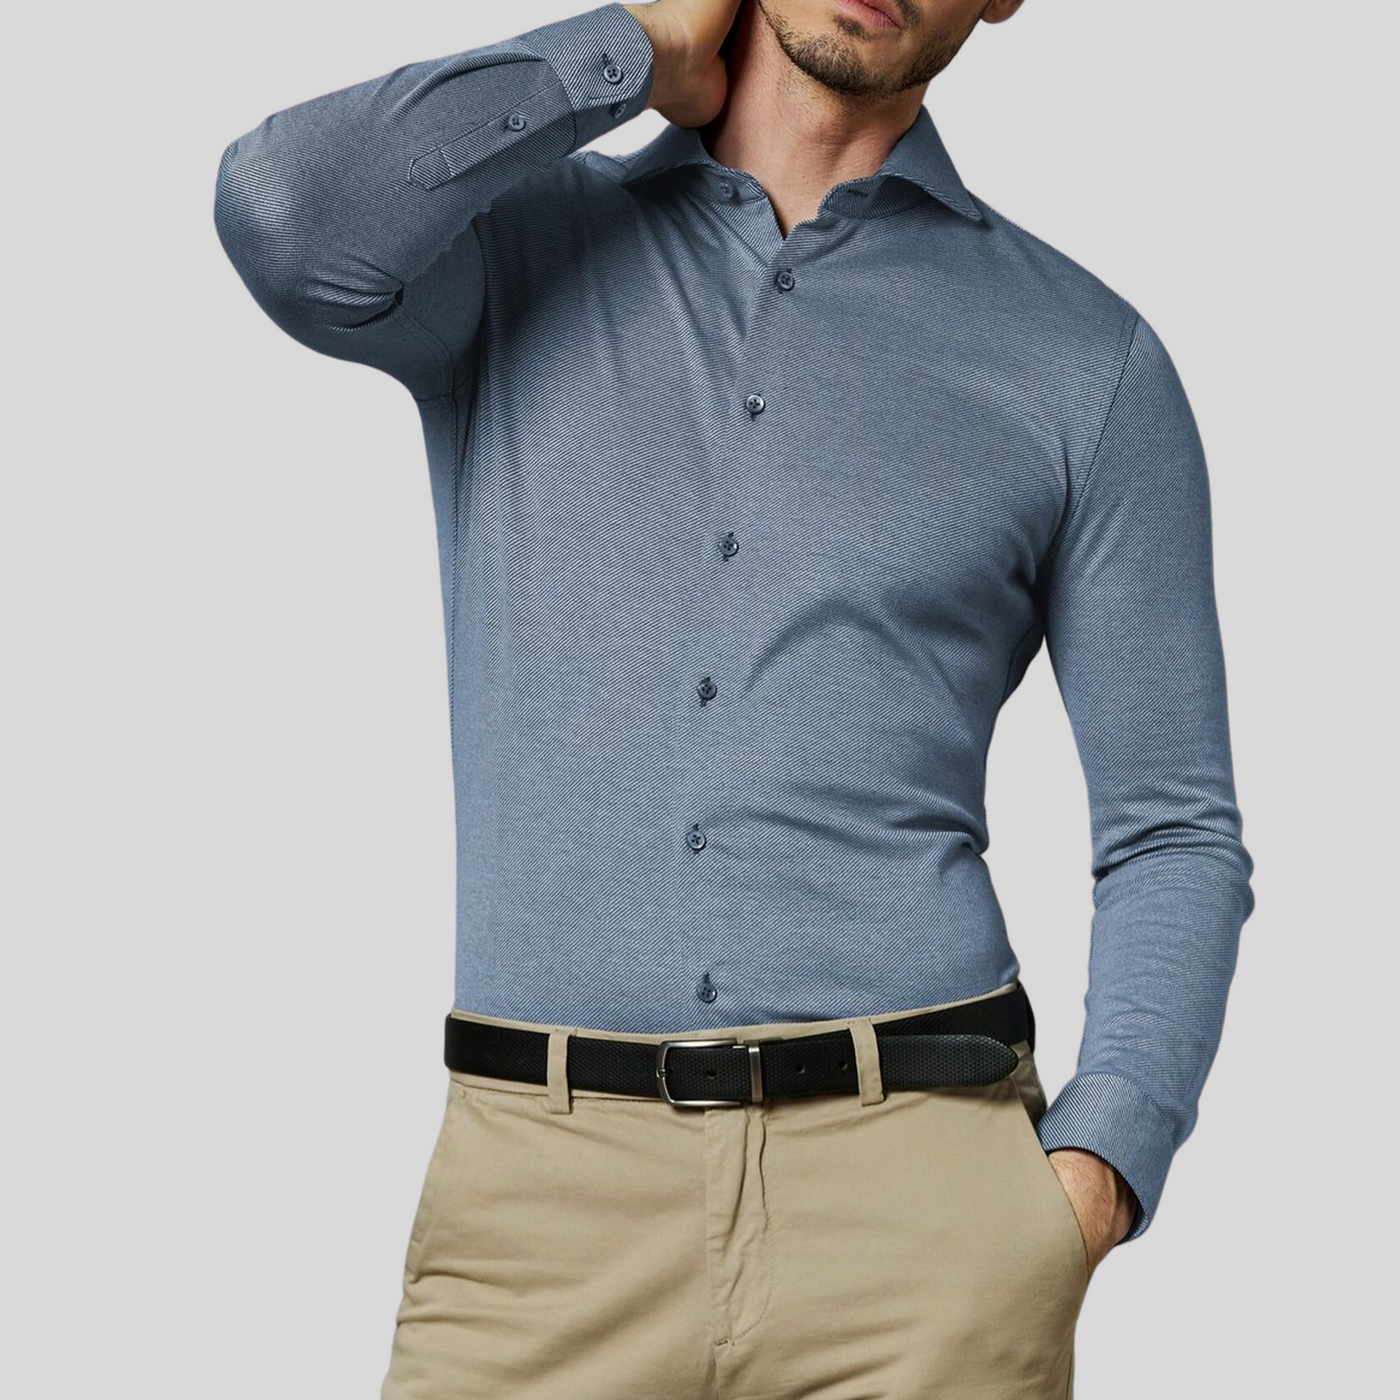 Gotstyle Fashion - Desoto Collar Shirts Twill Luxury Knit Jersey Shirt - Denim Blue